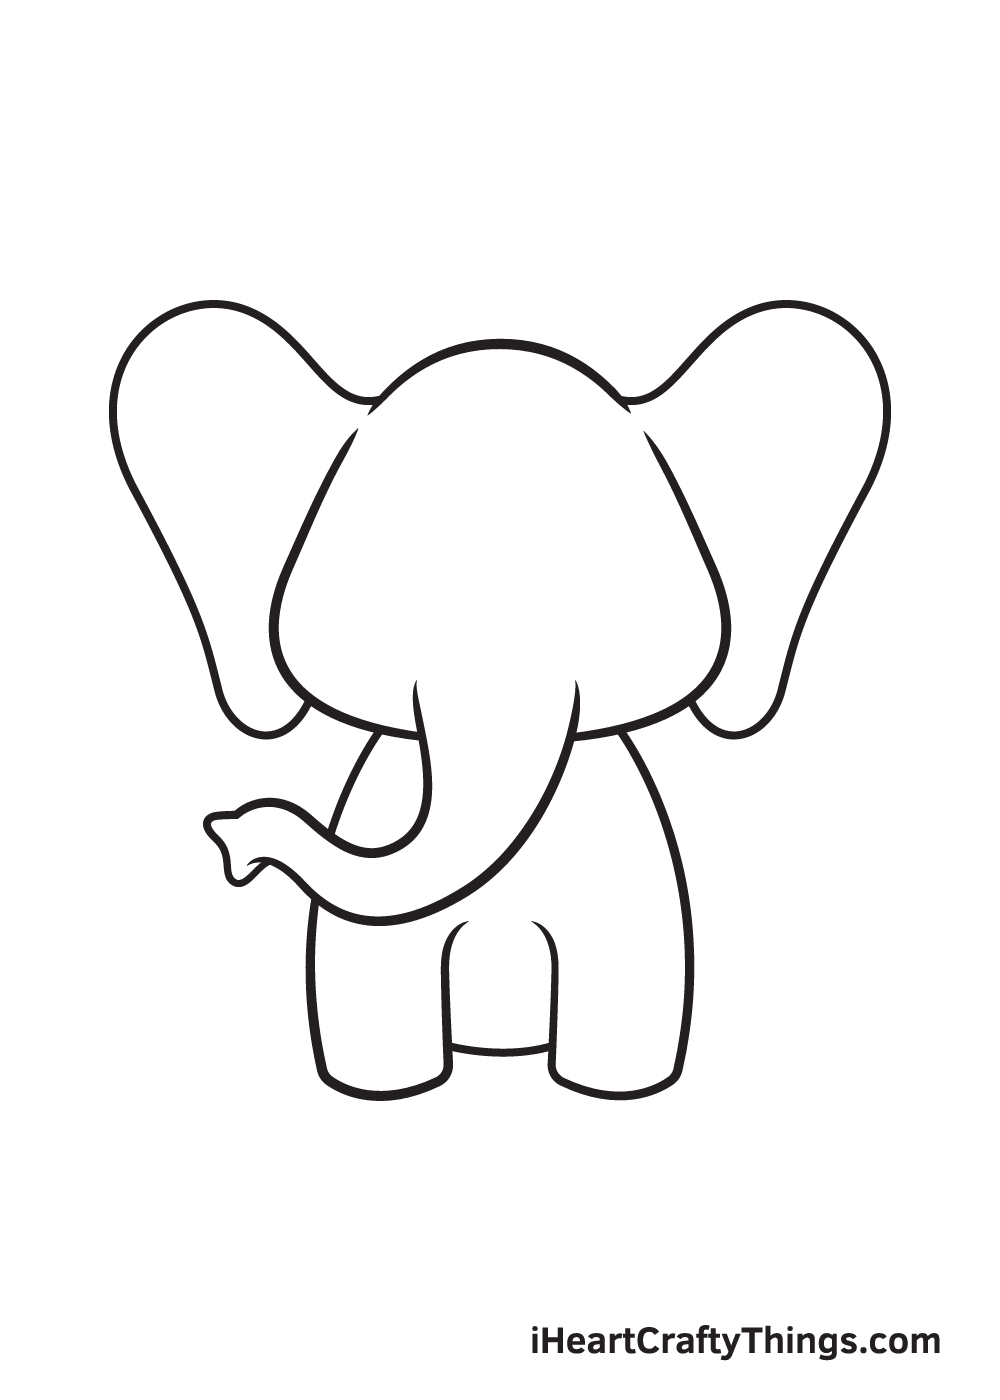 Elephant Drawing – Step 5